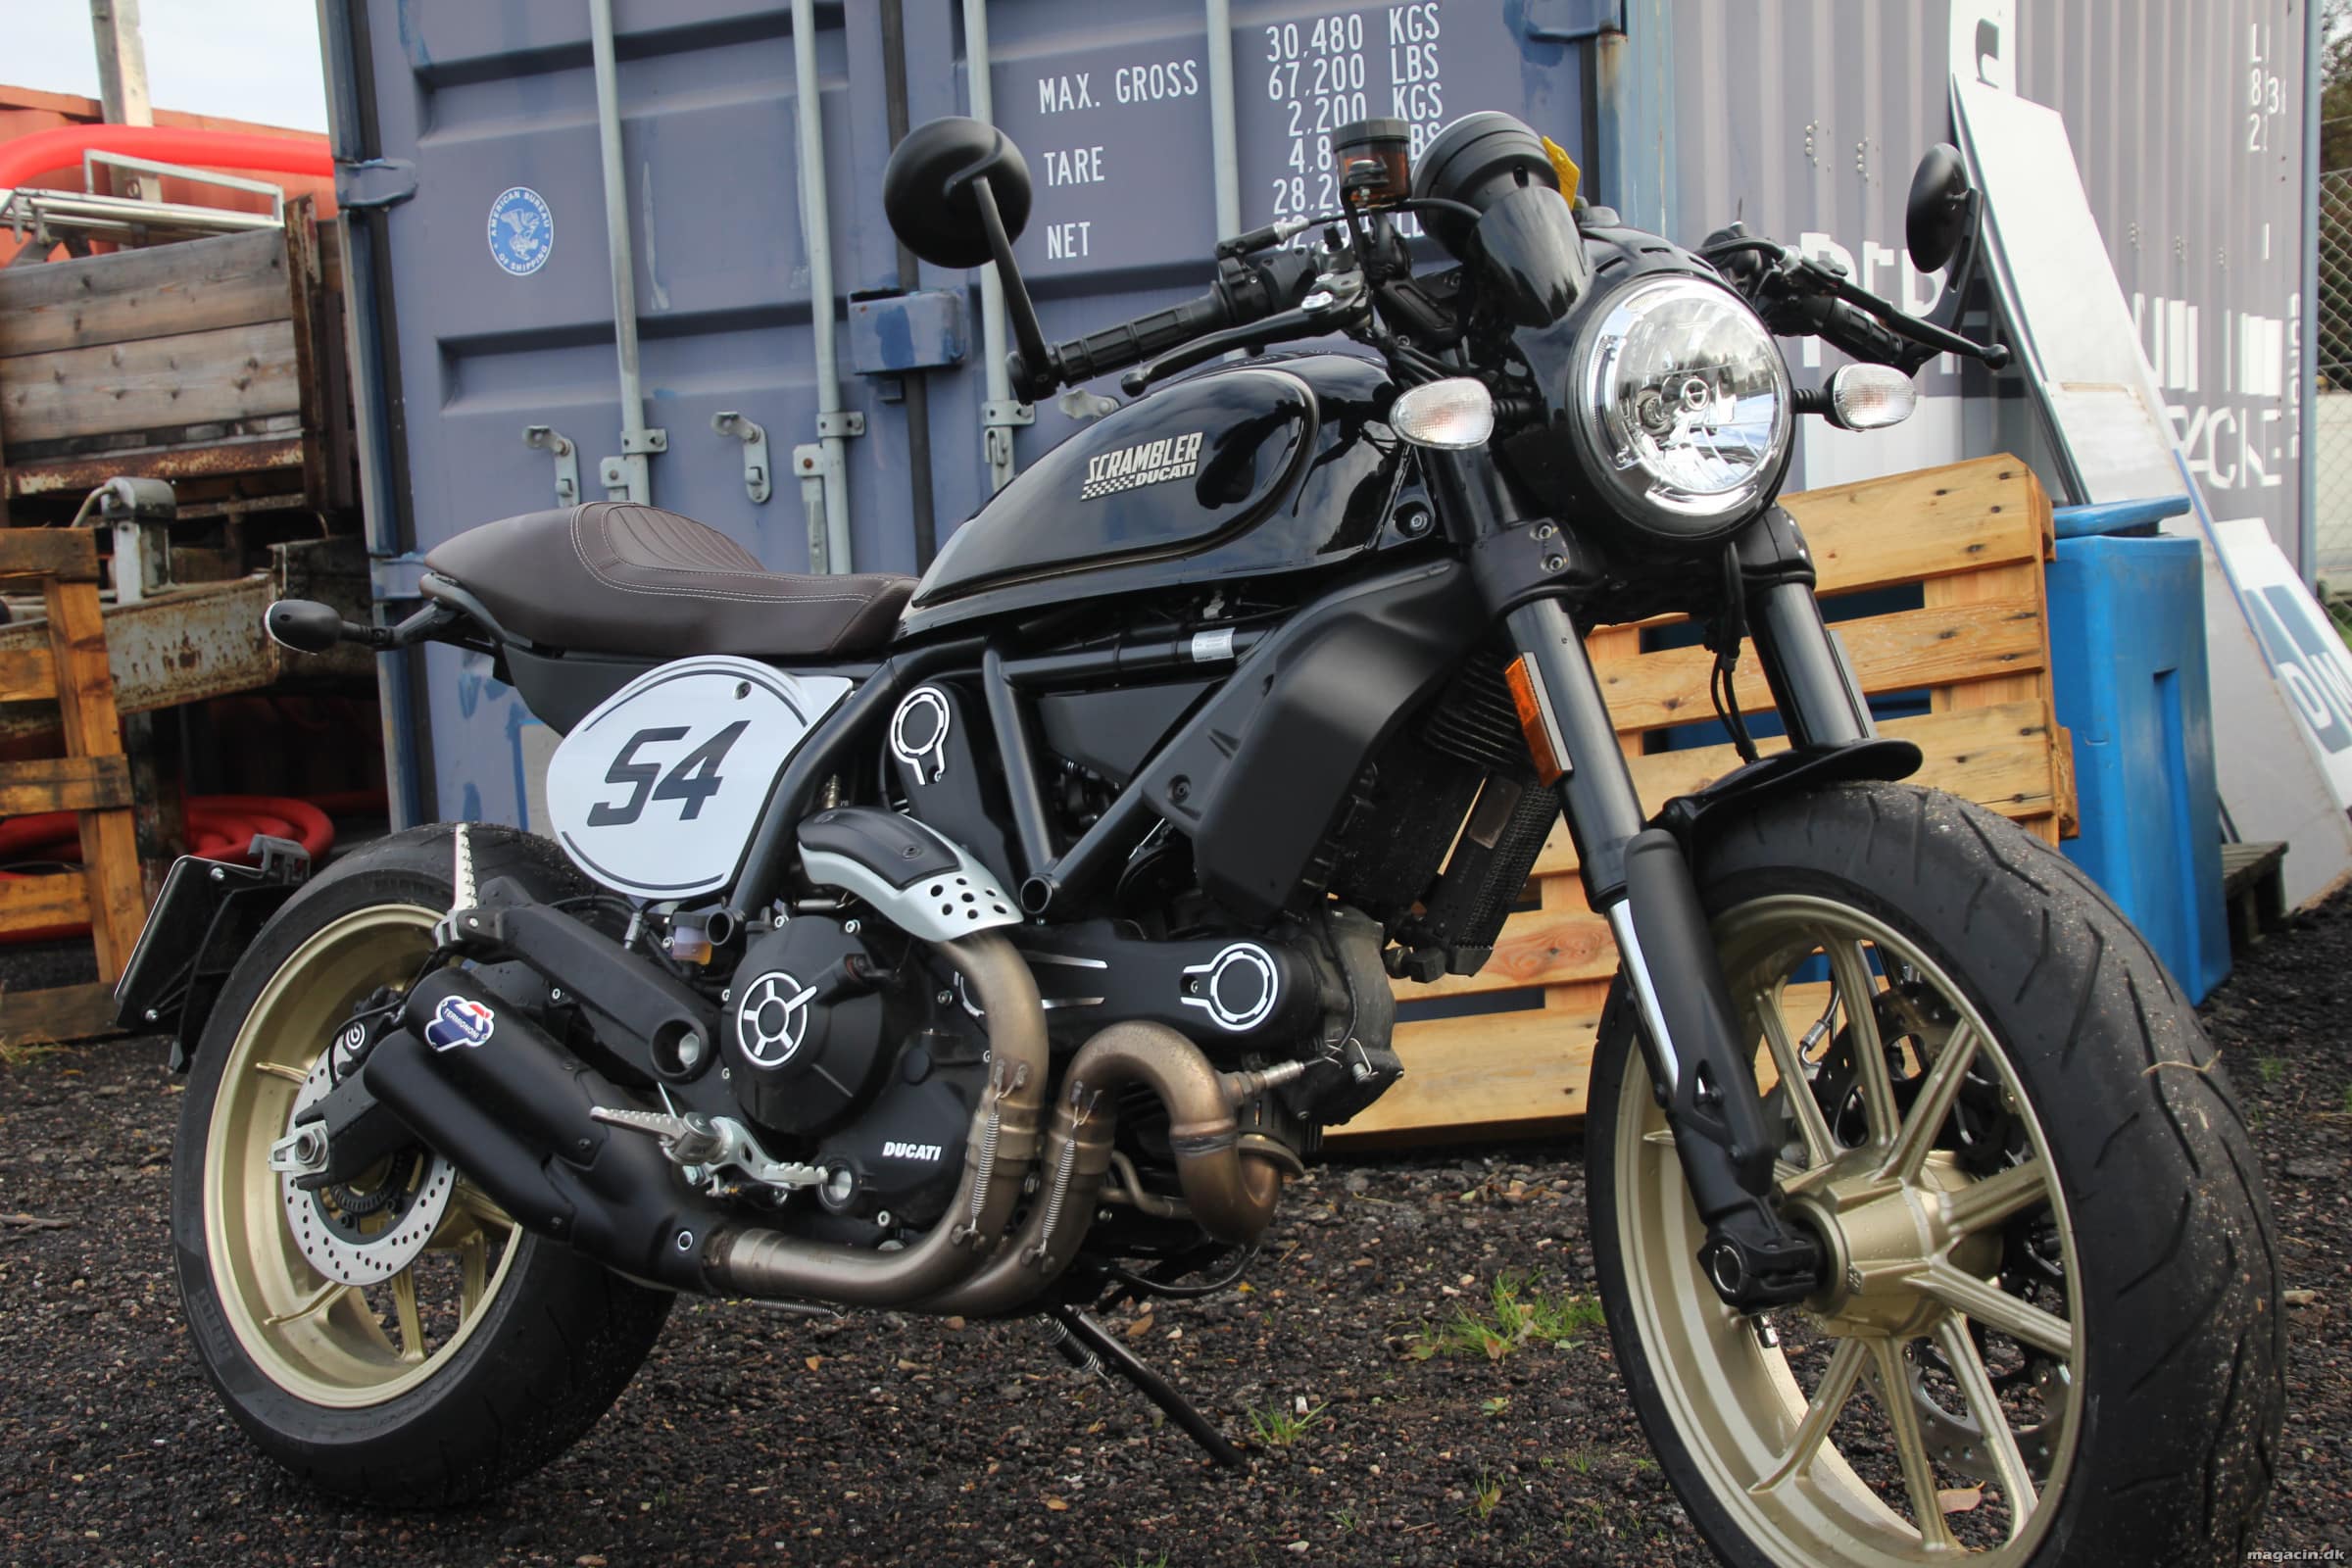 Test: 2019 Ducati Scrambler Café Racer – En livstilsmotorcykel